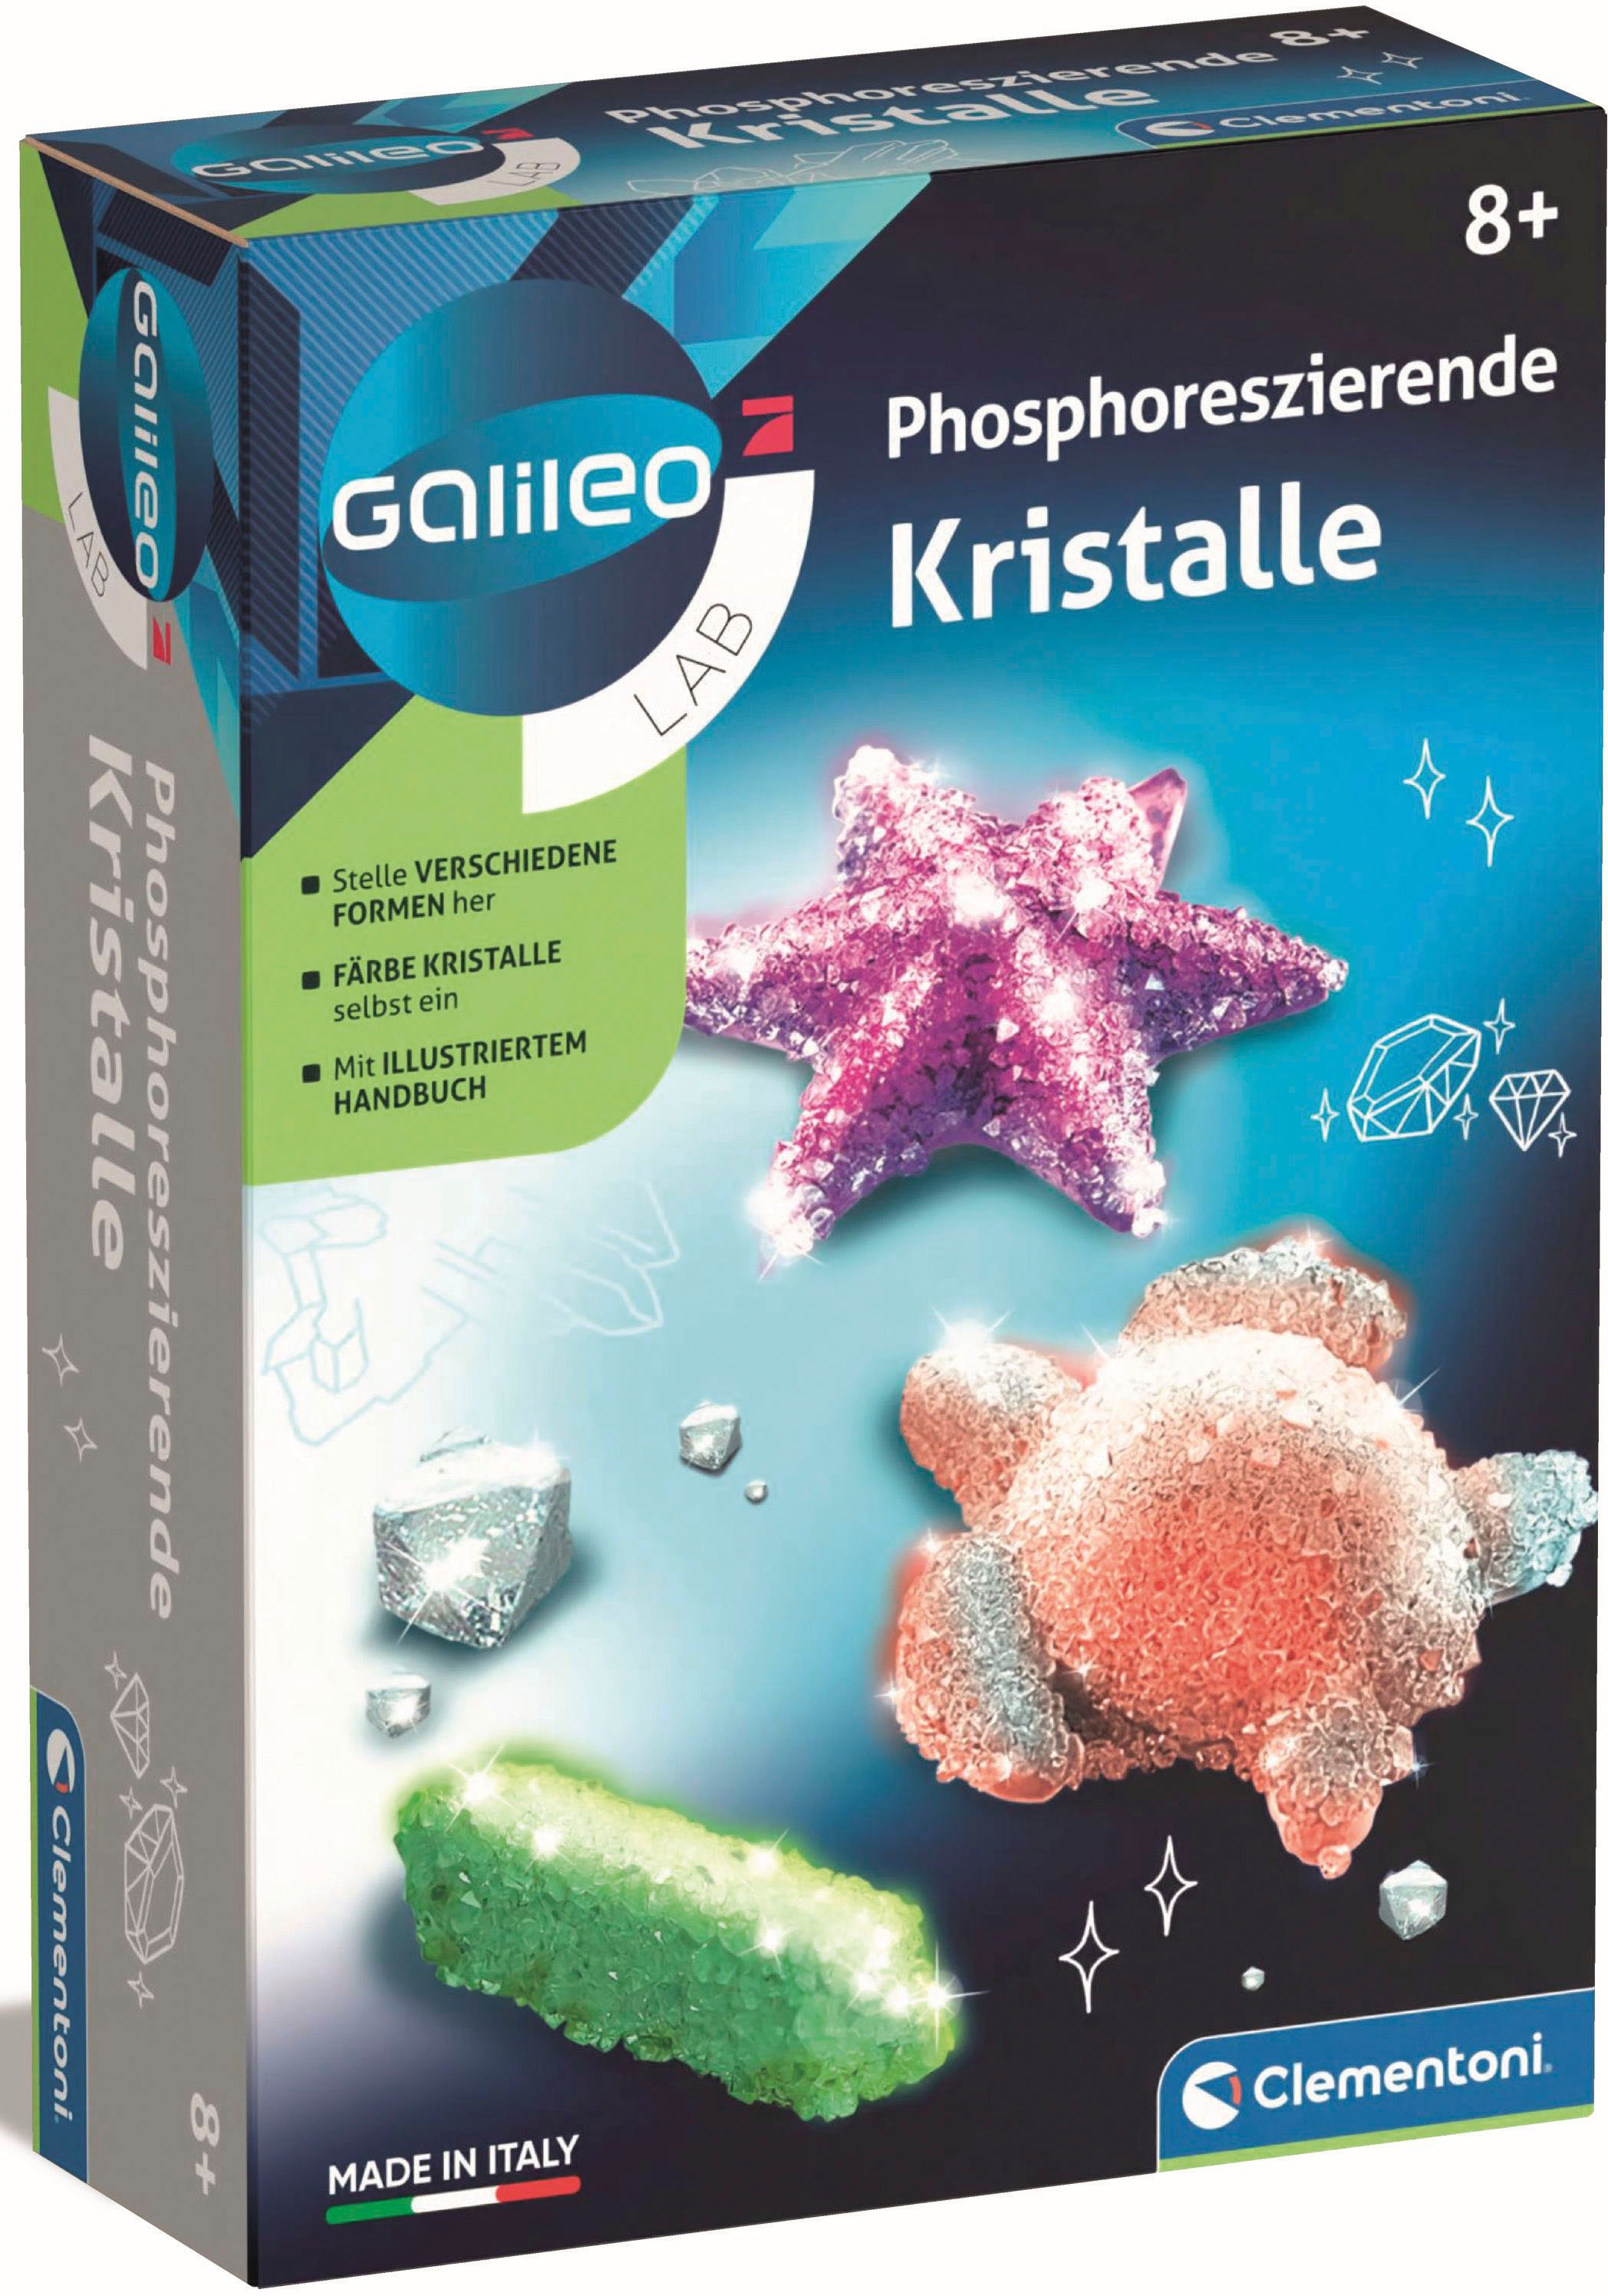 Clementoni® Experimentierkasten »Galileo, Phosphoreszierende Kristalle«, Made in Europe